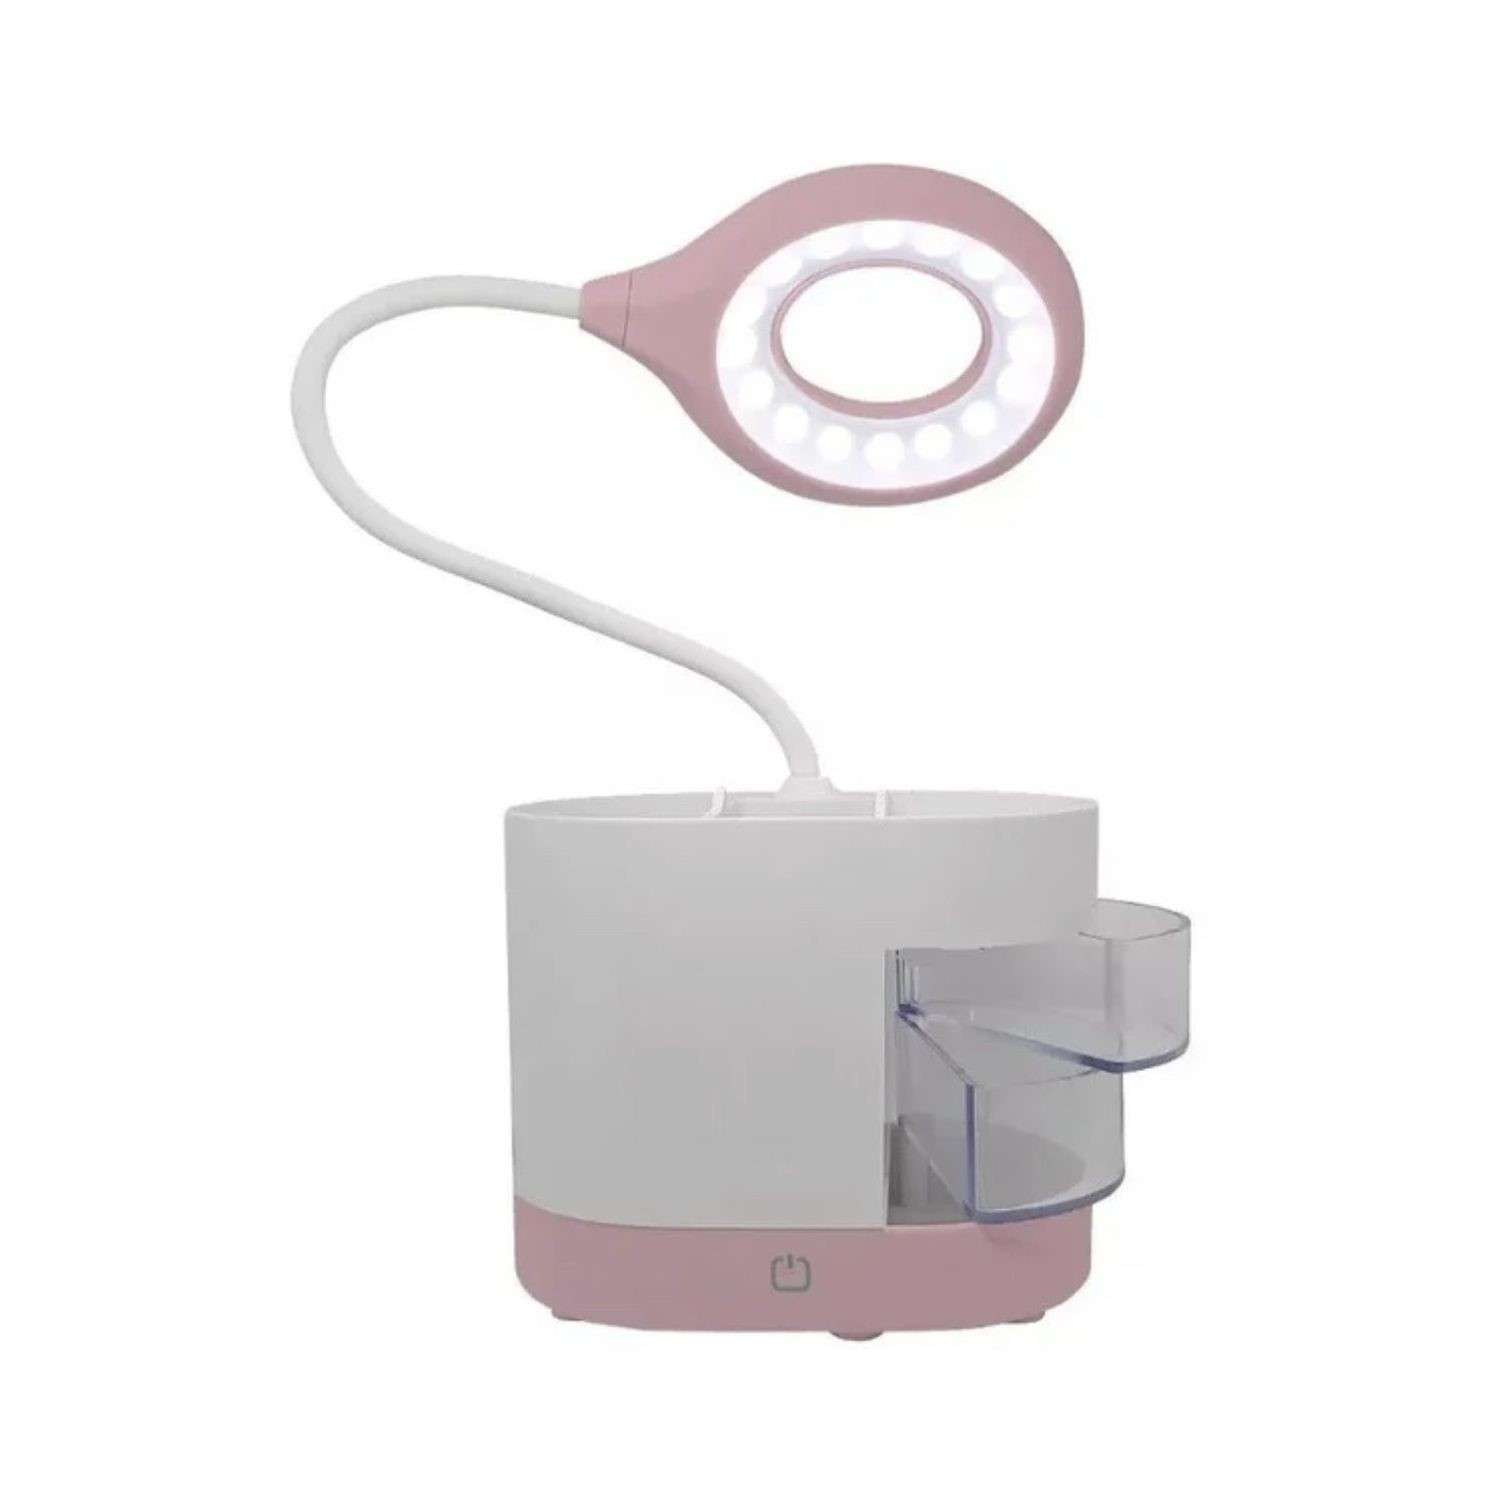 Настольная USB лампа Rabizy розовая - фото 1